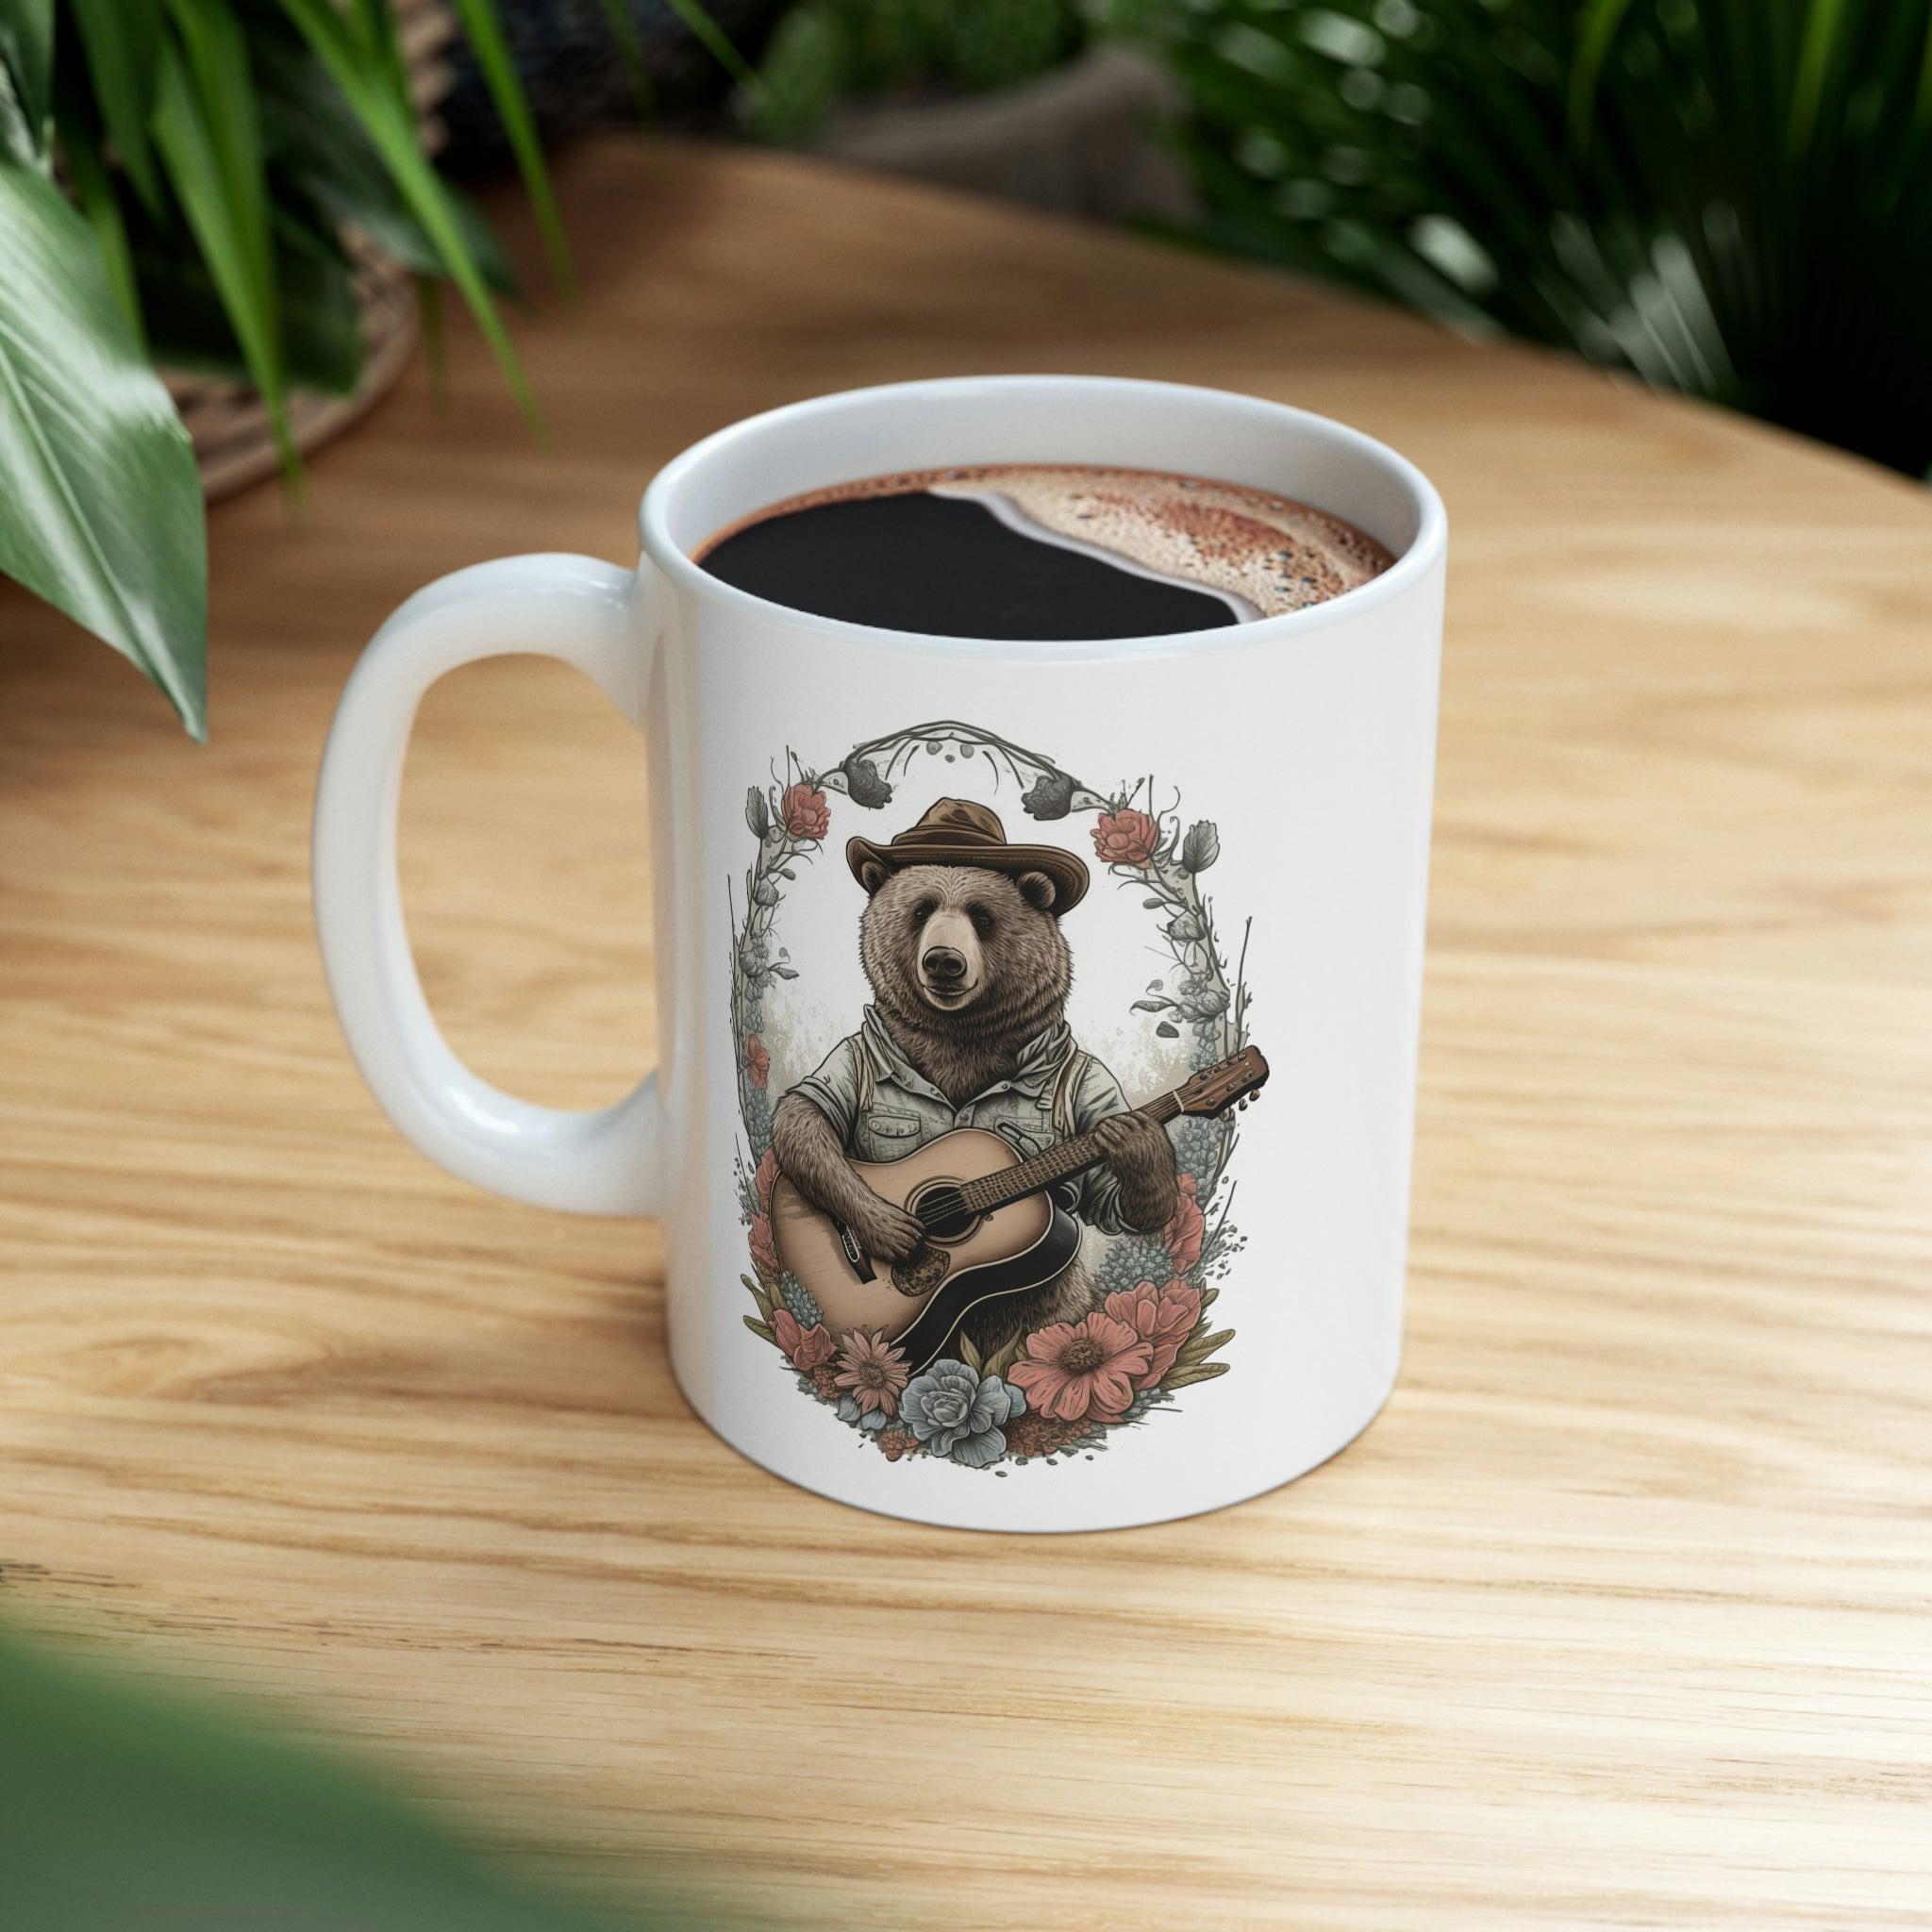 Bear With Hat Playing Guitar Coffee Mug